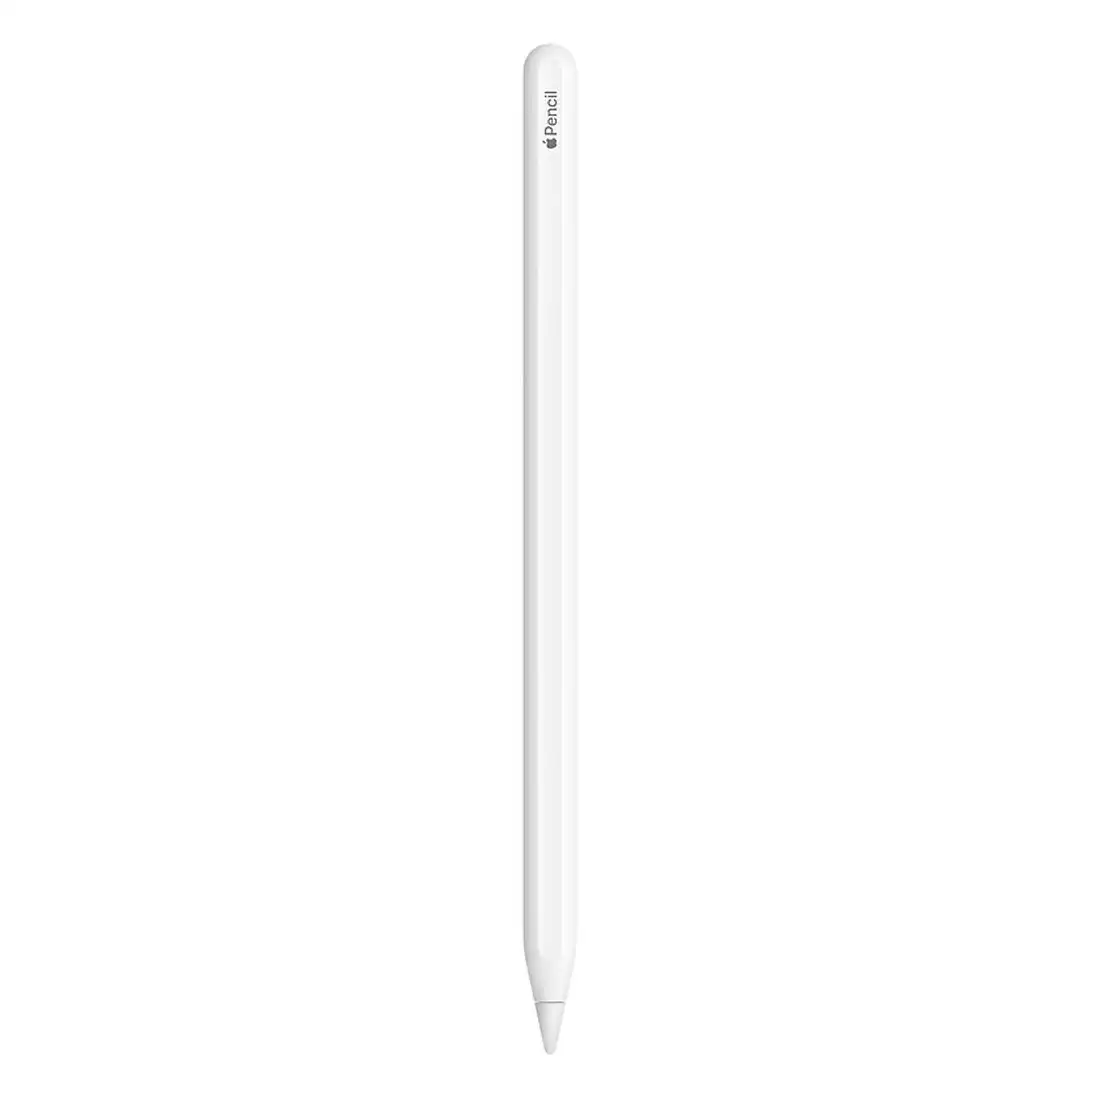 Apple Pencil (2nd Gen) A2051 - White